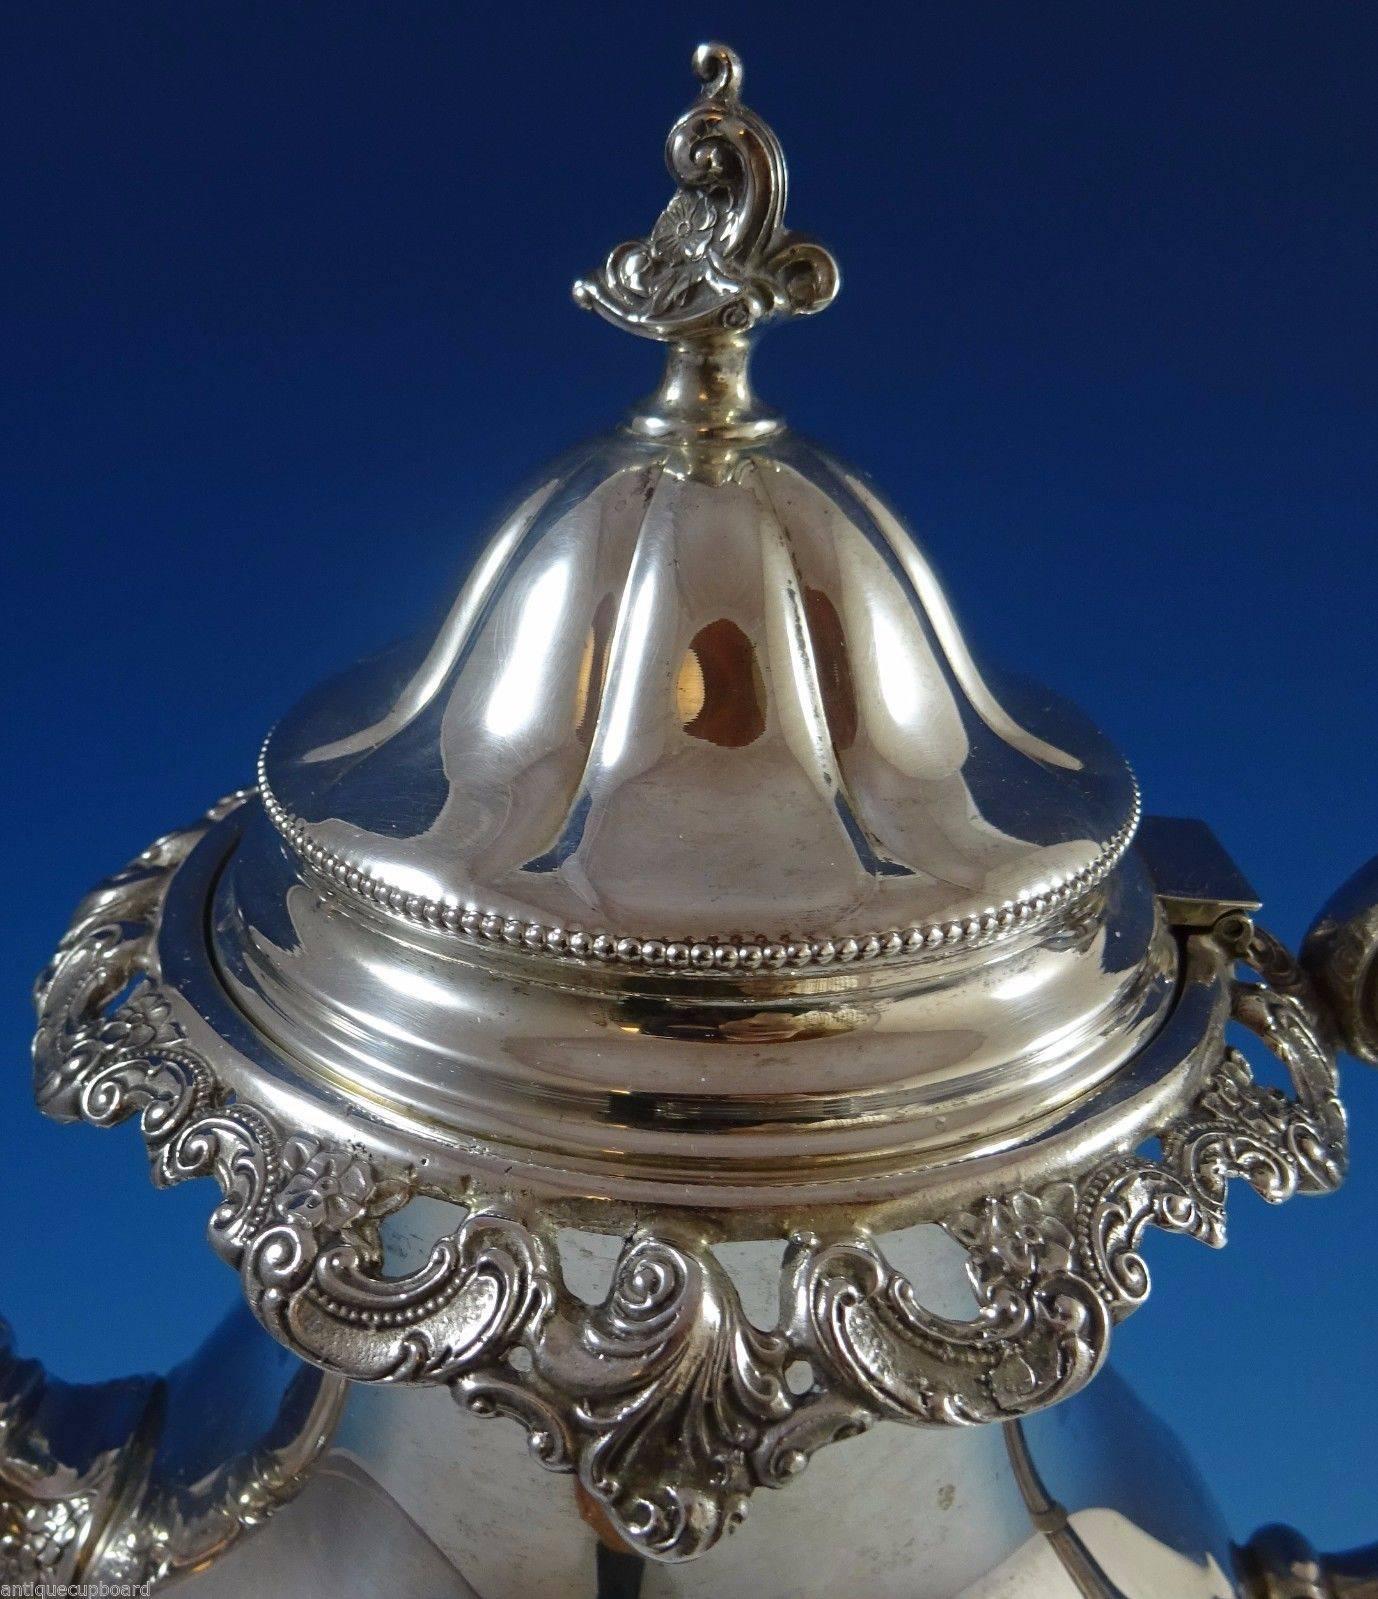 Grande Baroque Wallace Sterling Silver Tea Set Stunning 4-Piece Set Hollowware 1